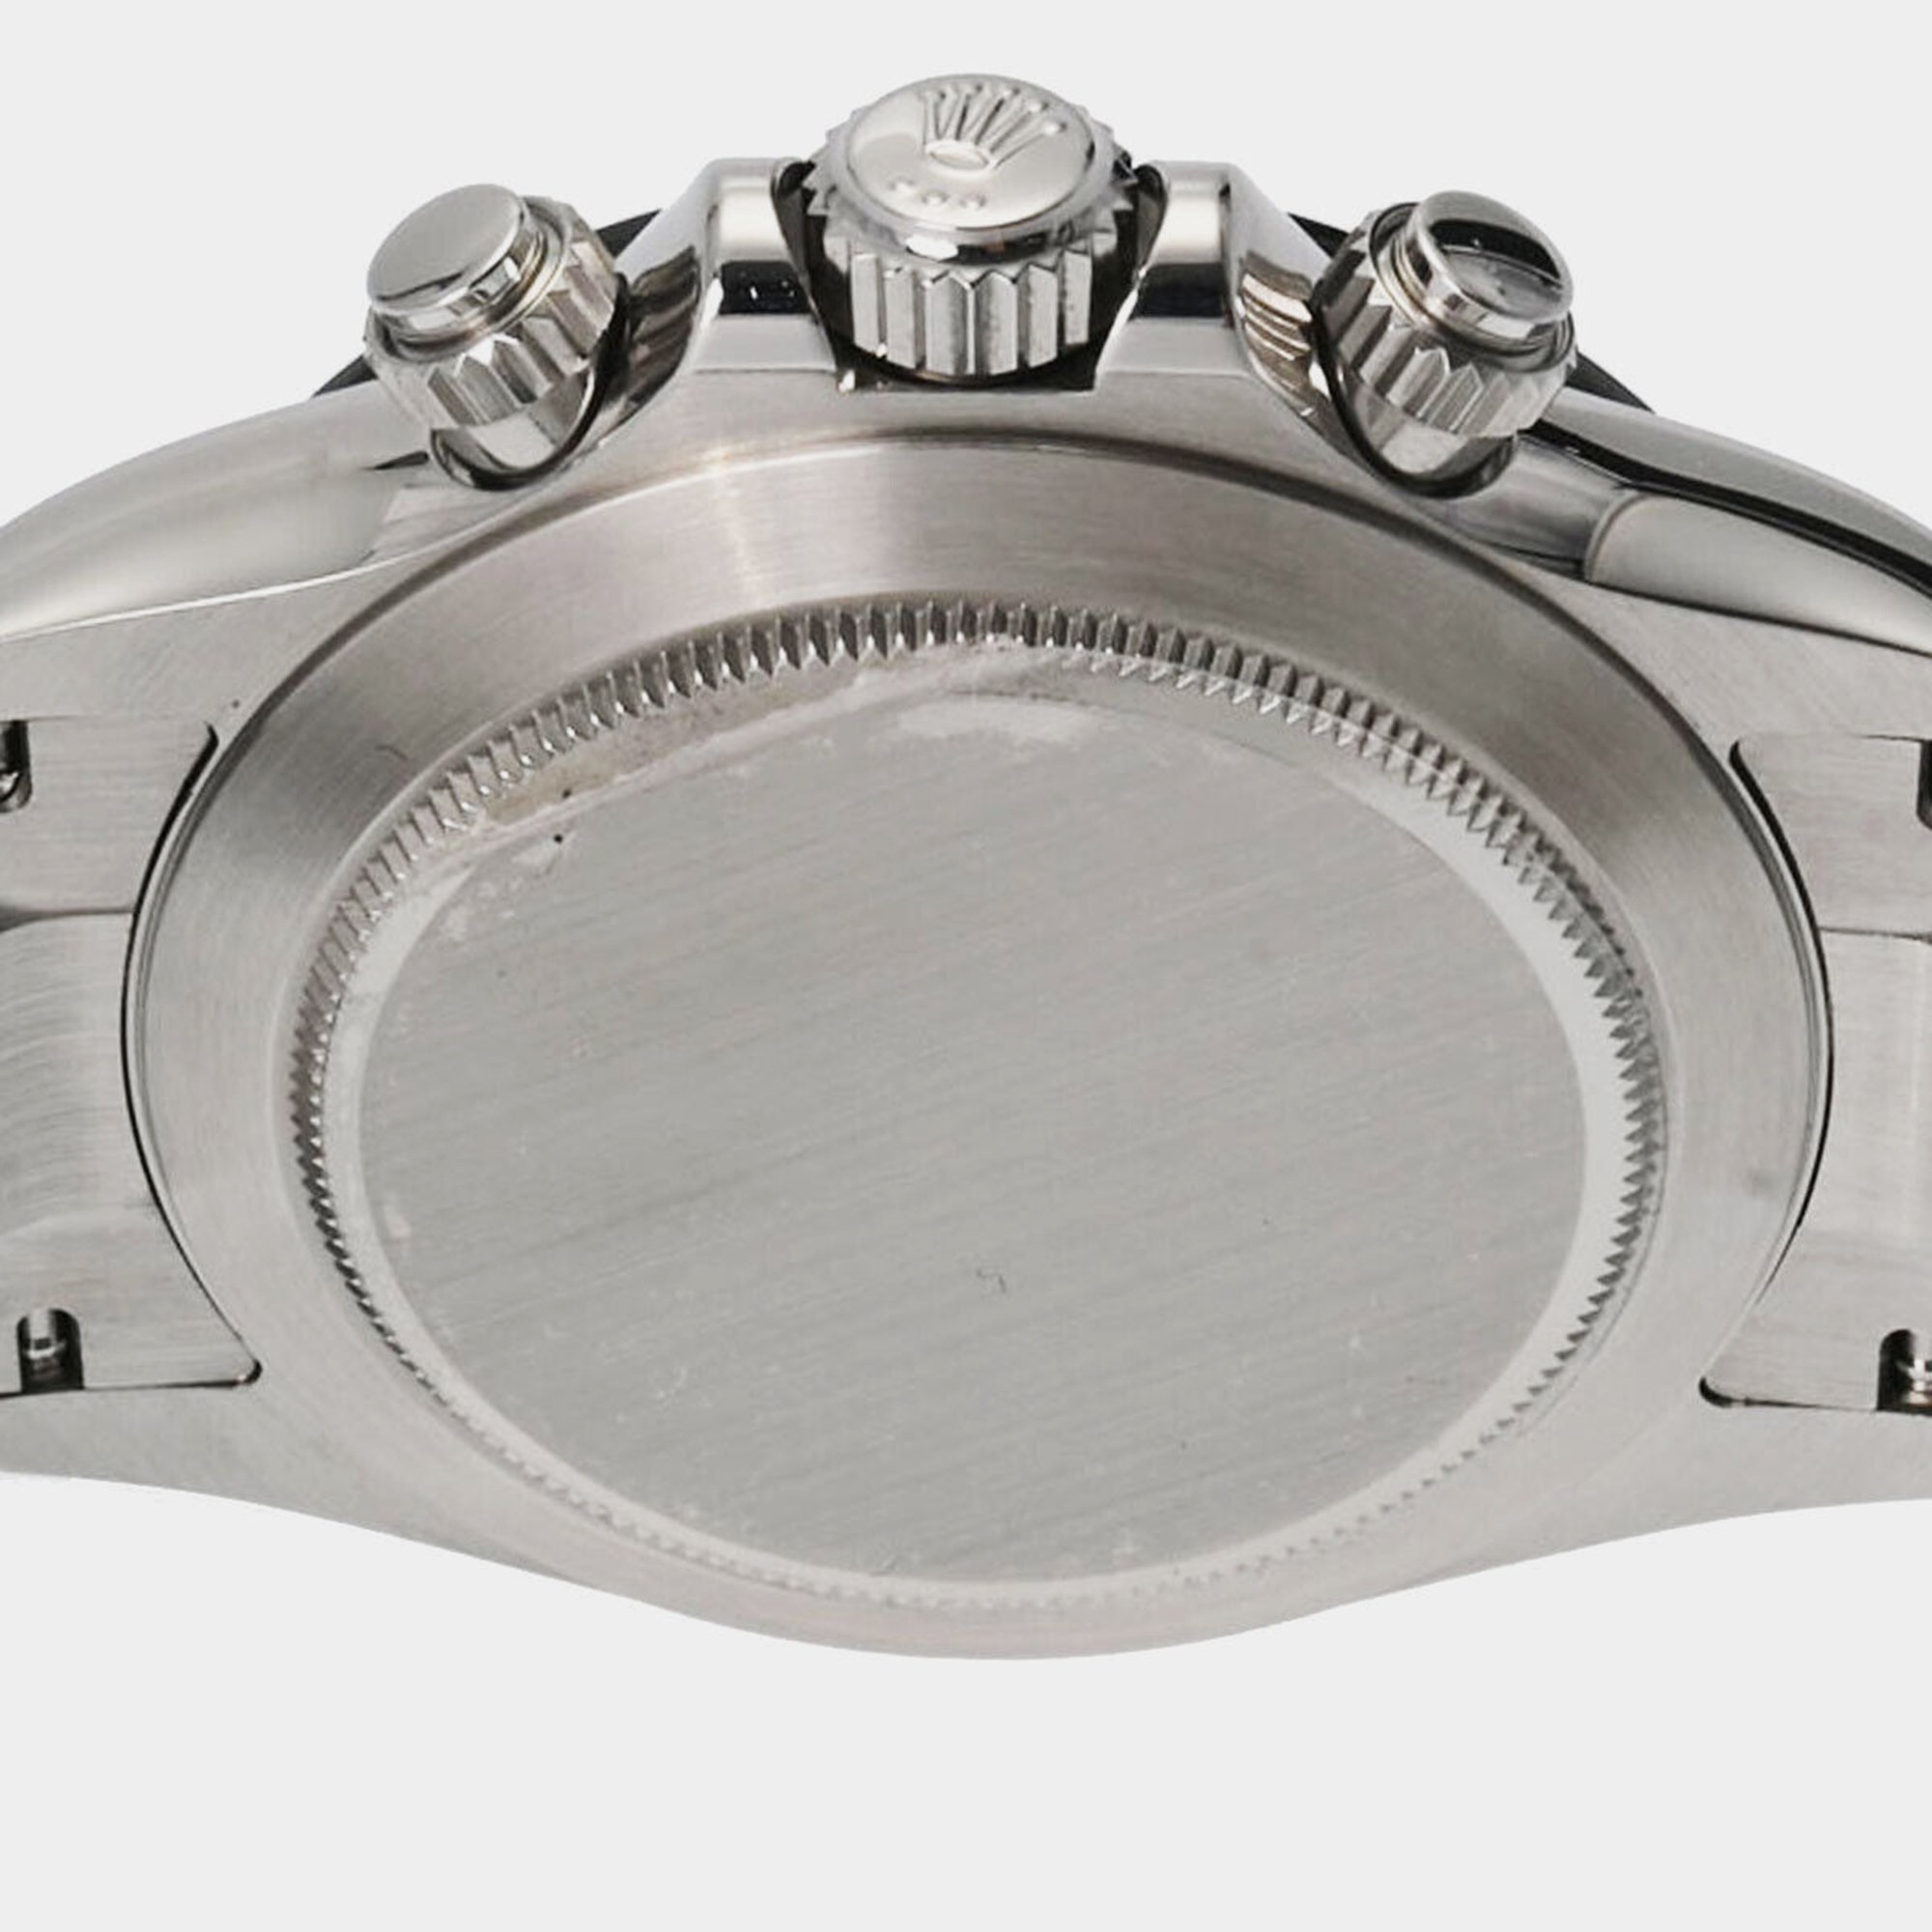 Rolex Black Stainless Steel Cosmograph Daytona 116500LN Automatic Men's Wristwatch 40 Mm